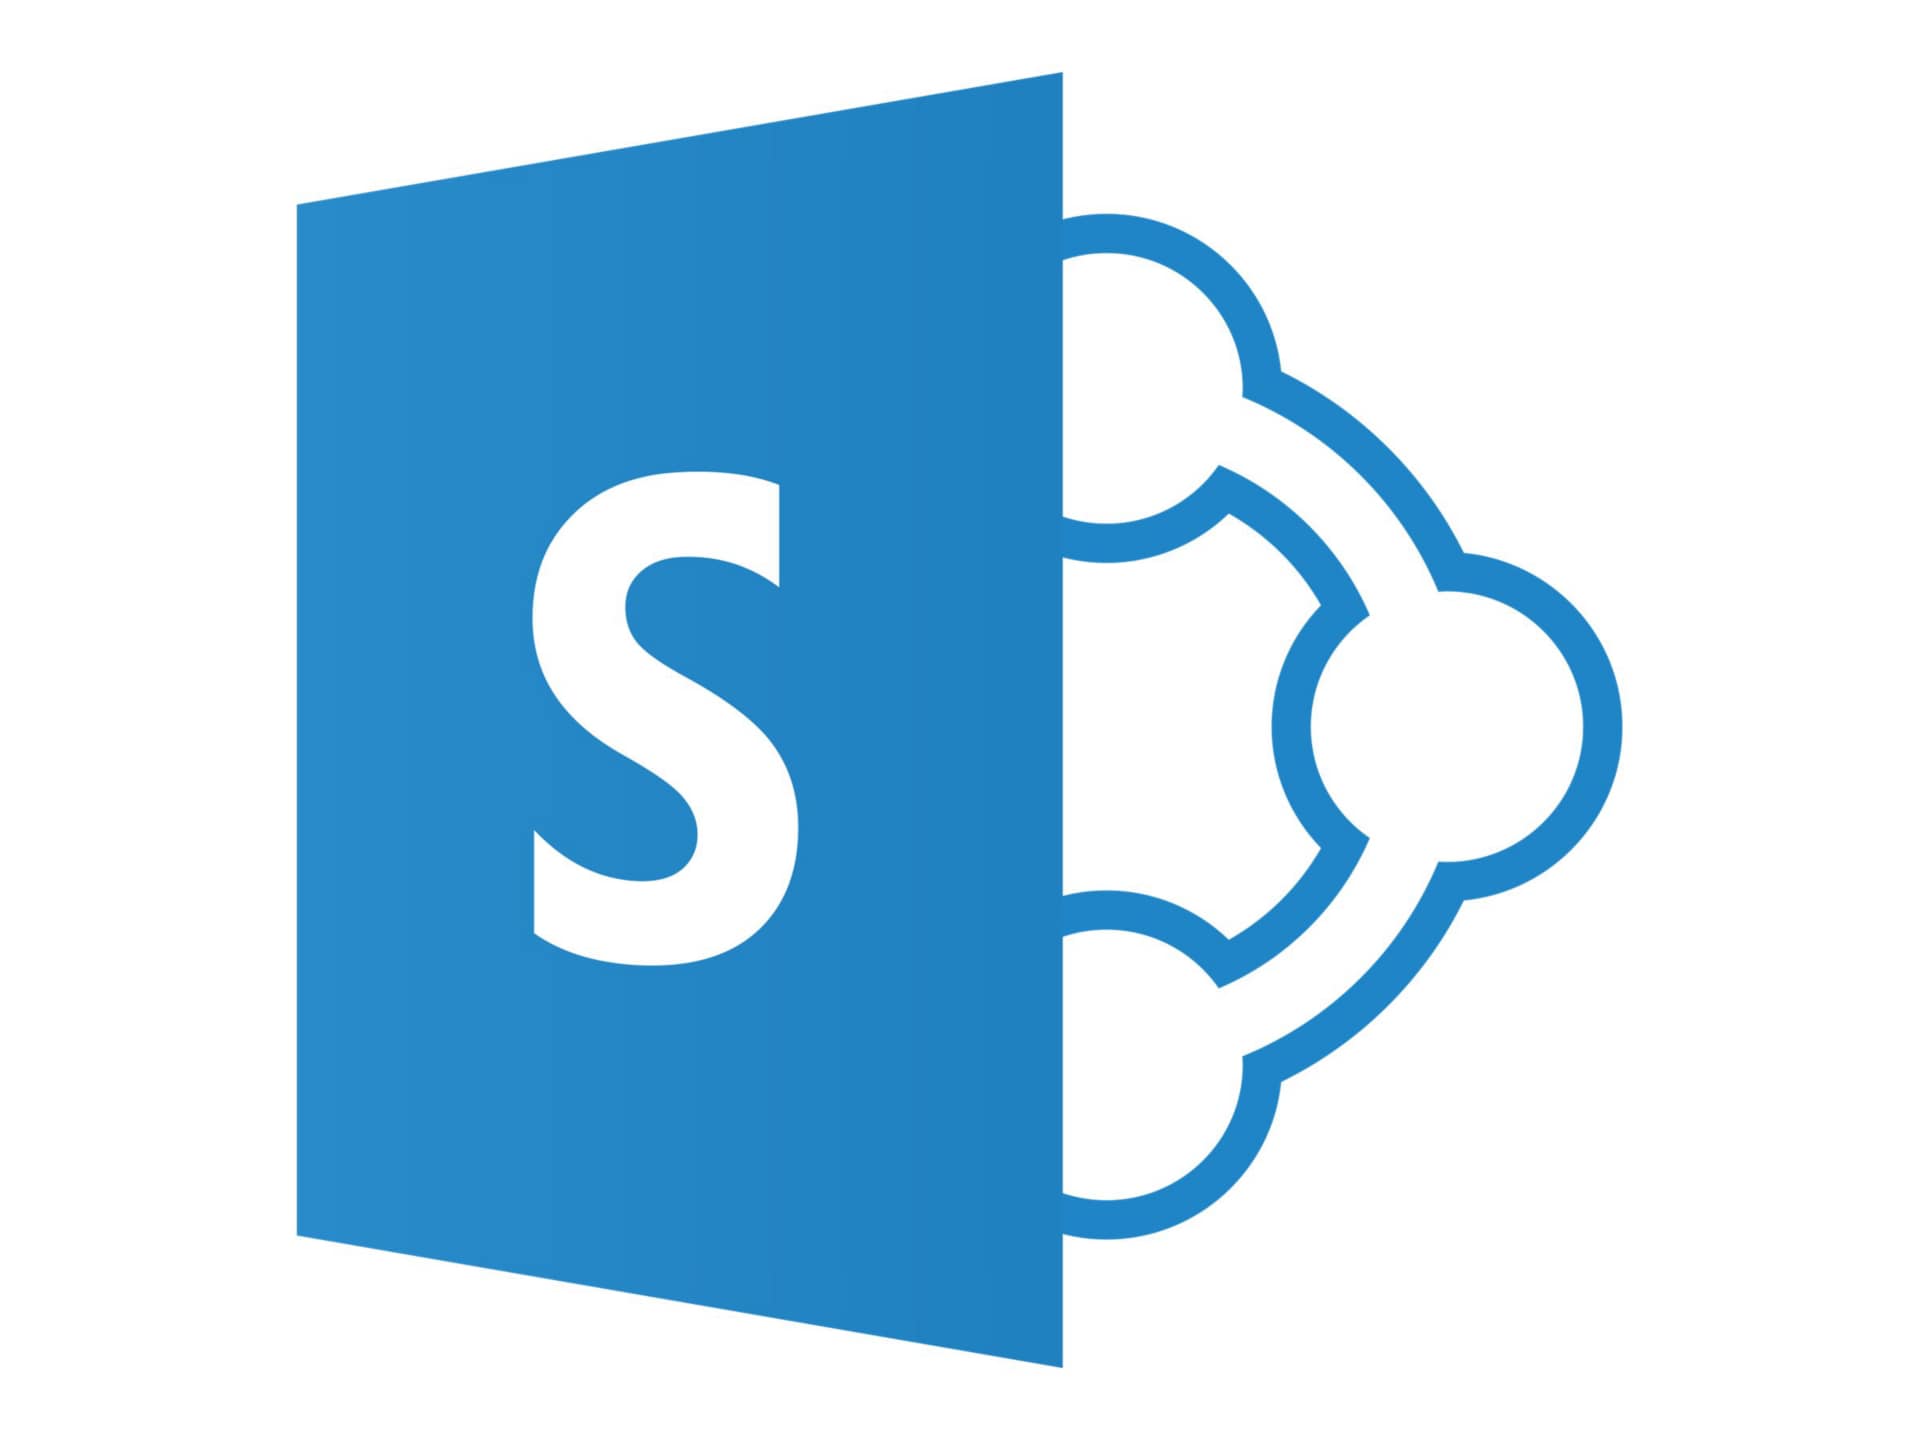 Microsoft SharePoint Server 2019 - license - 1 server